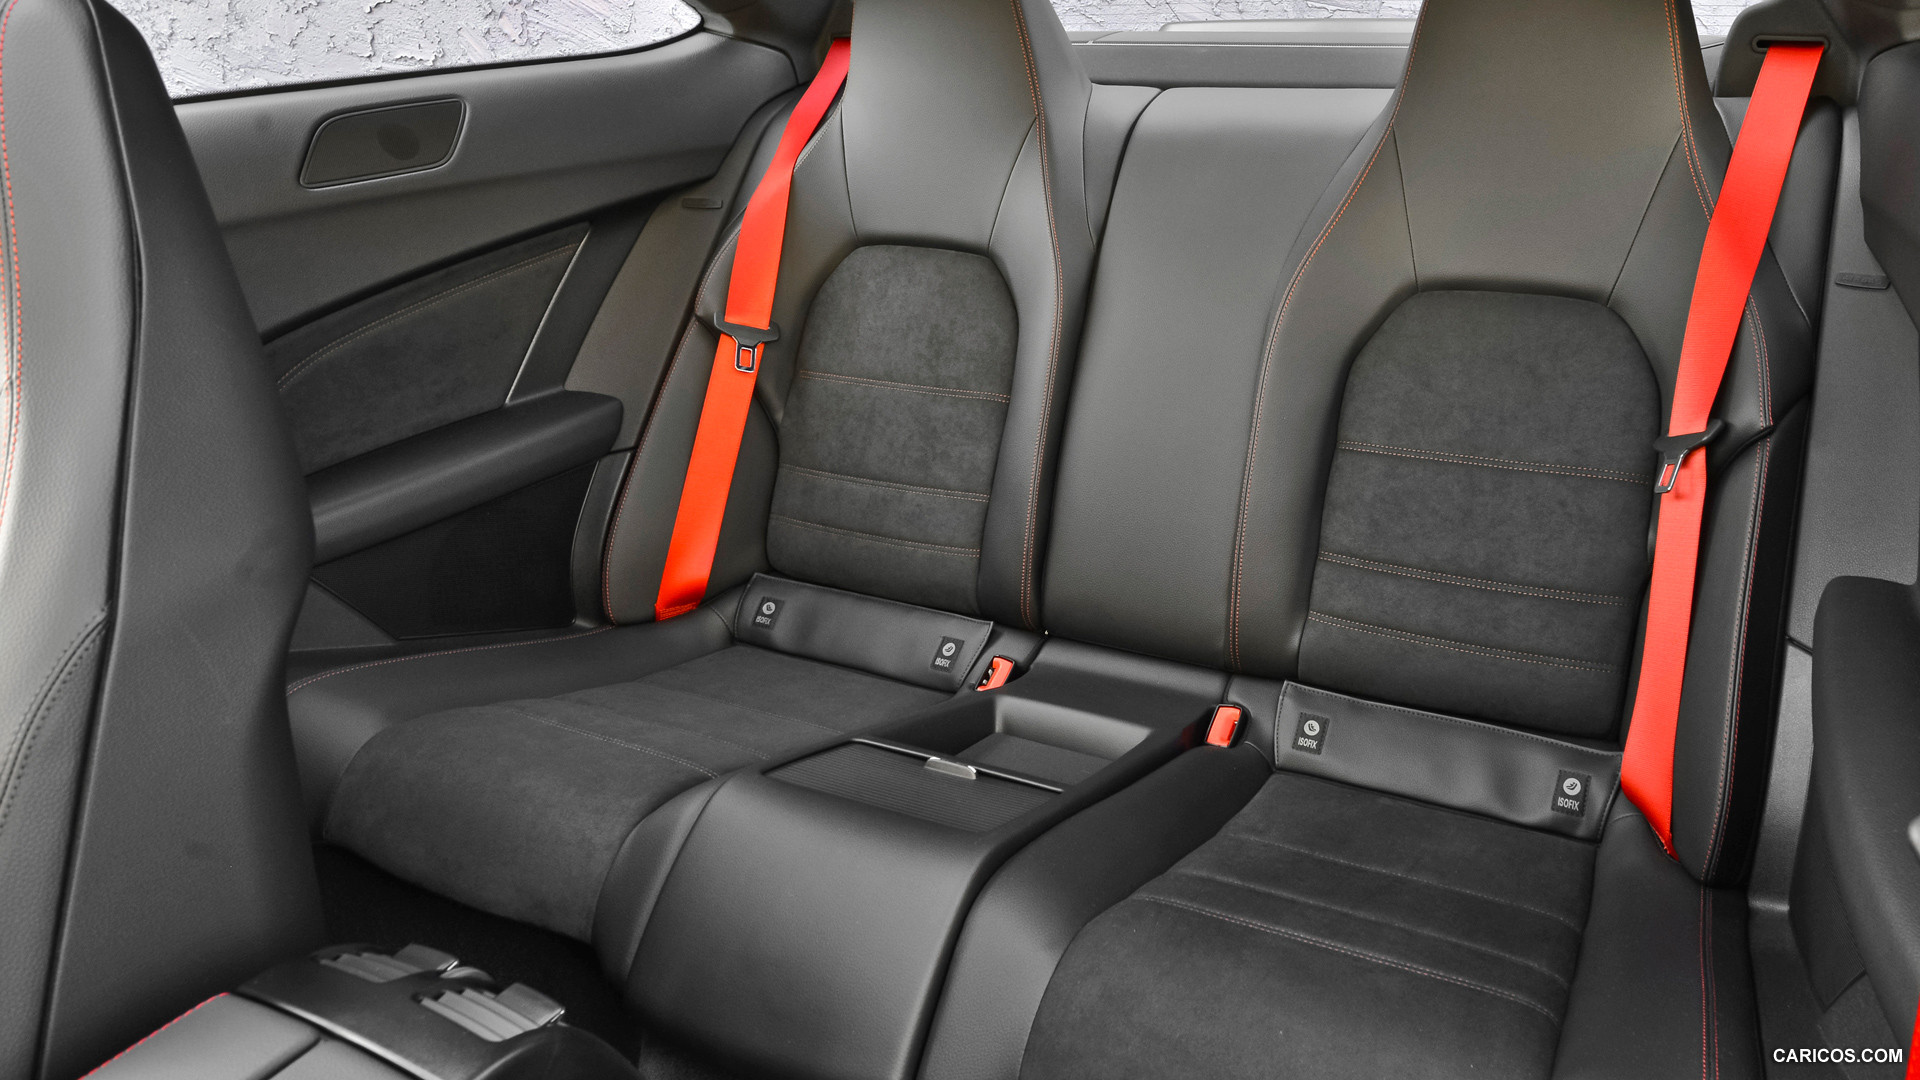 Mercedes-Benz C250 Coupe (2013)  - Interior Rear Seats, #84 of 86